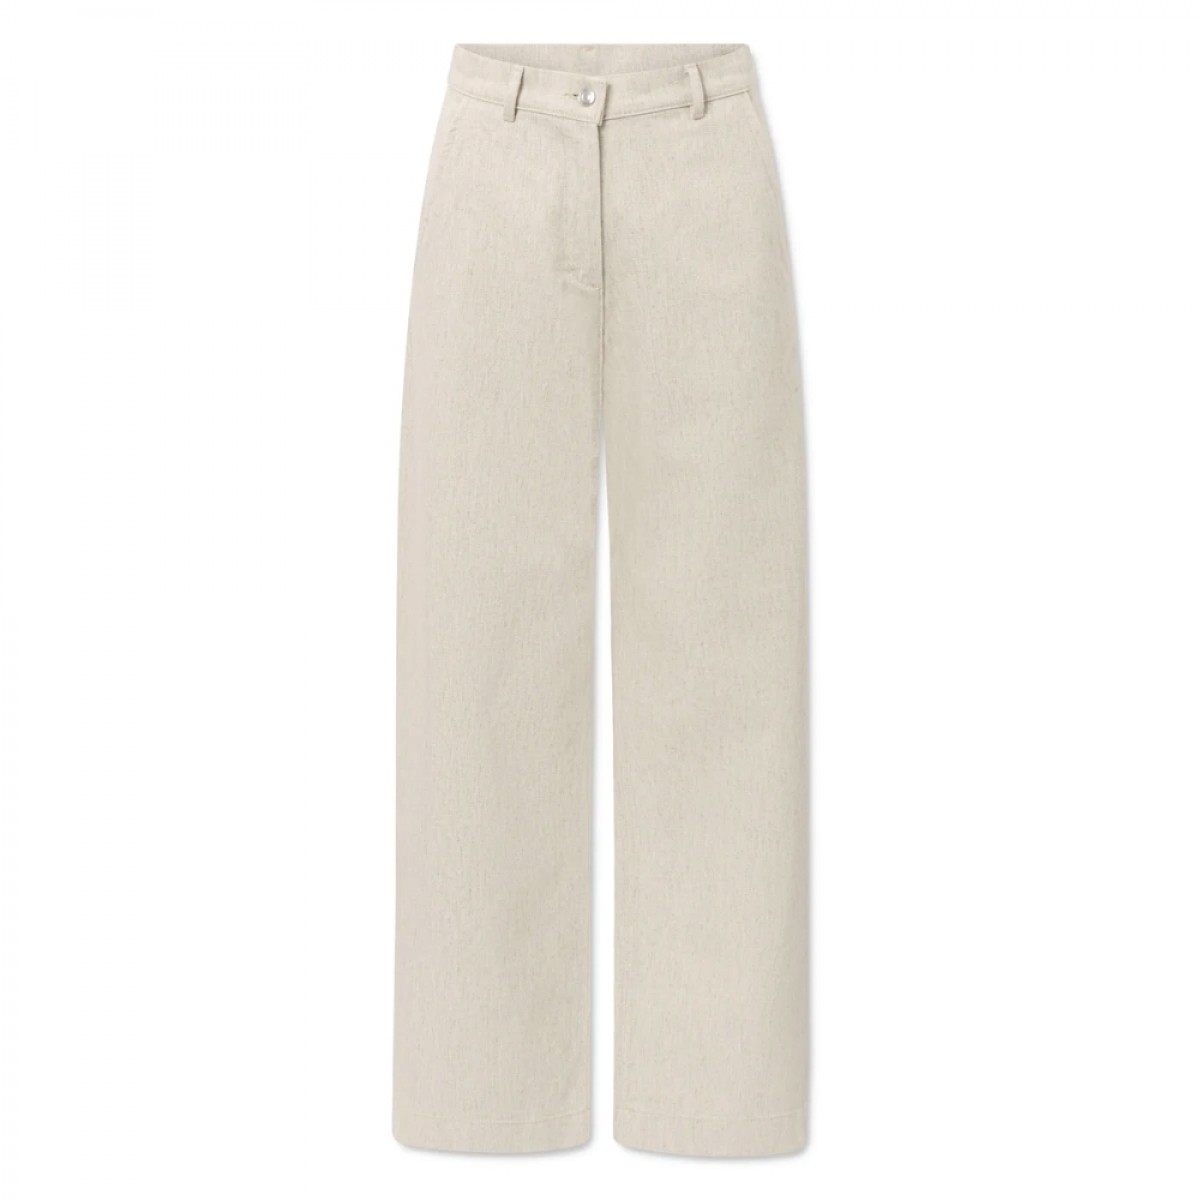 bora pants - off white - front